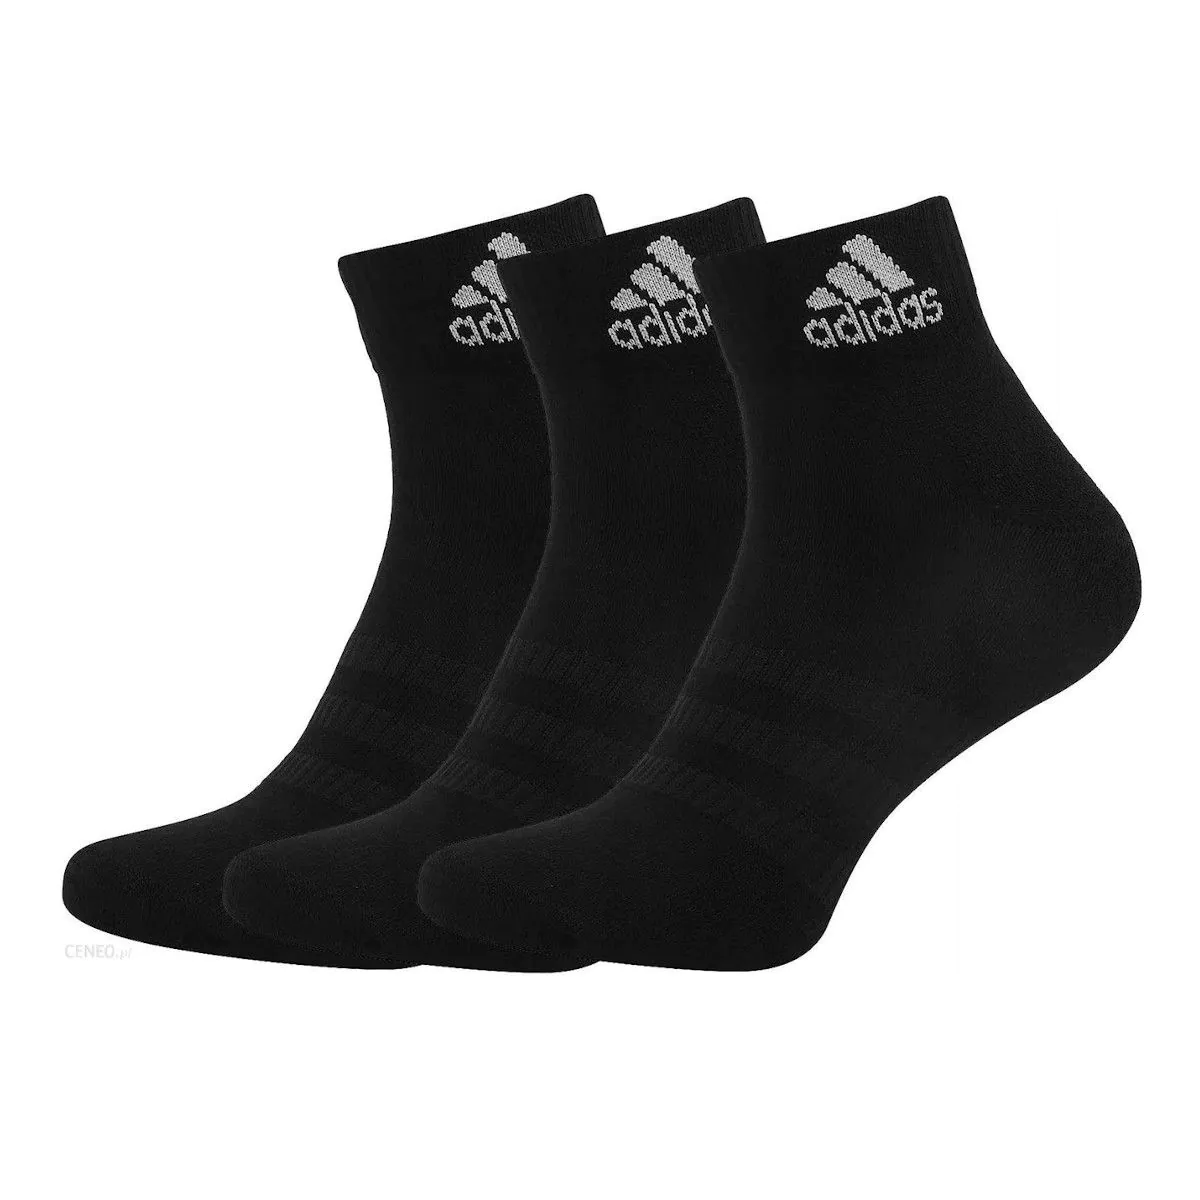 Performance Ankle Socks - Pair DZ9379